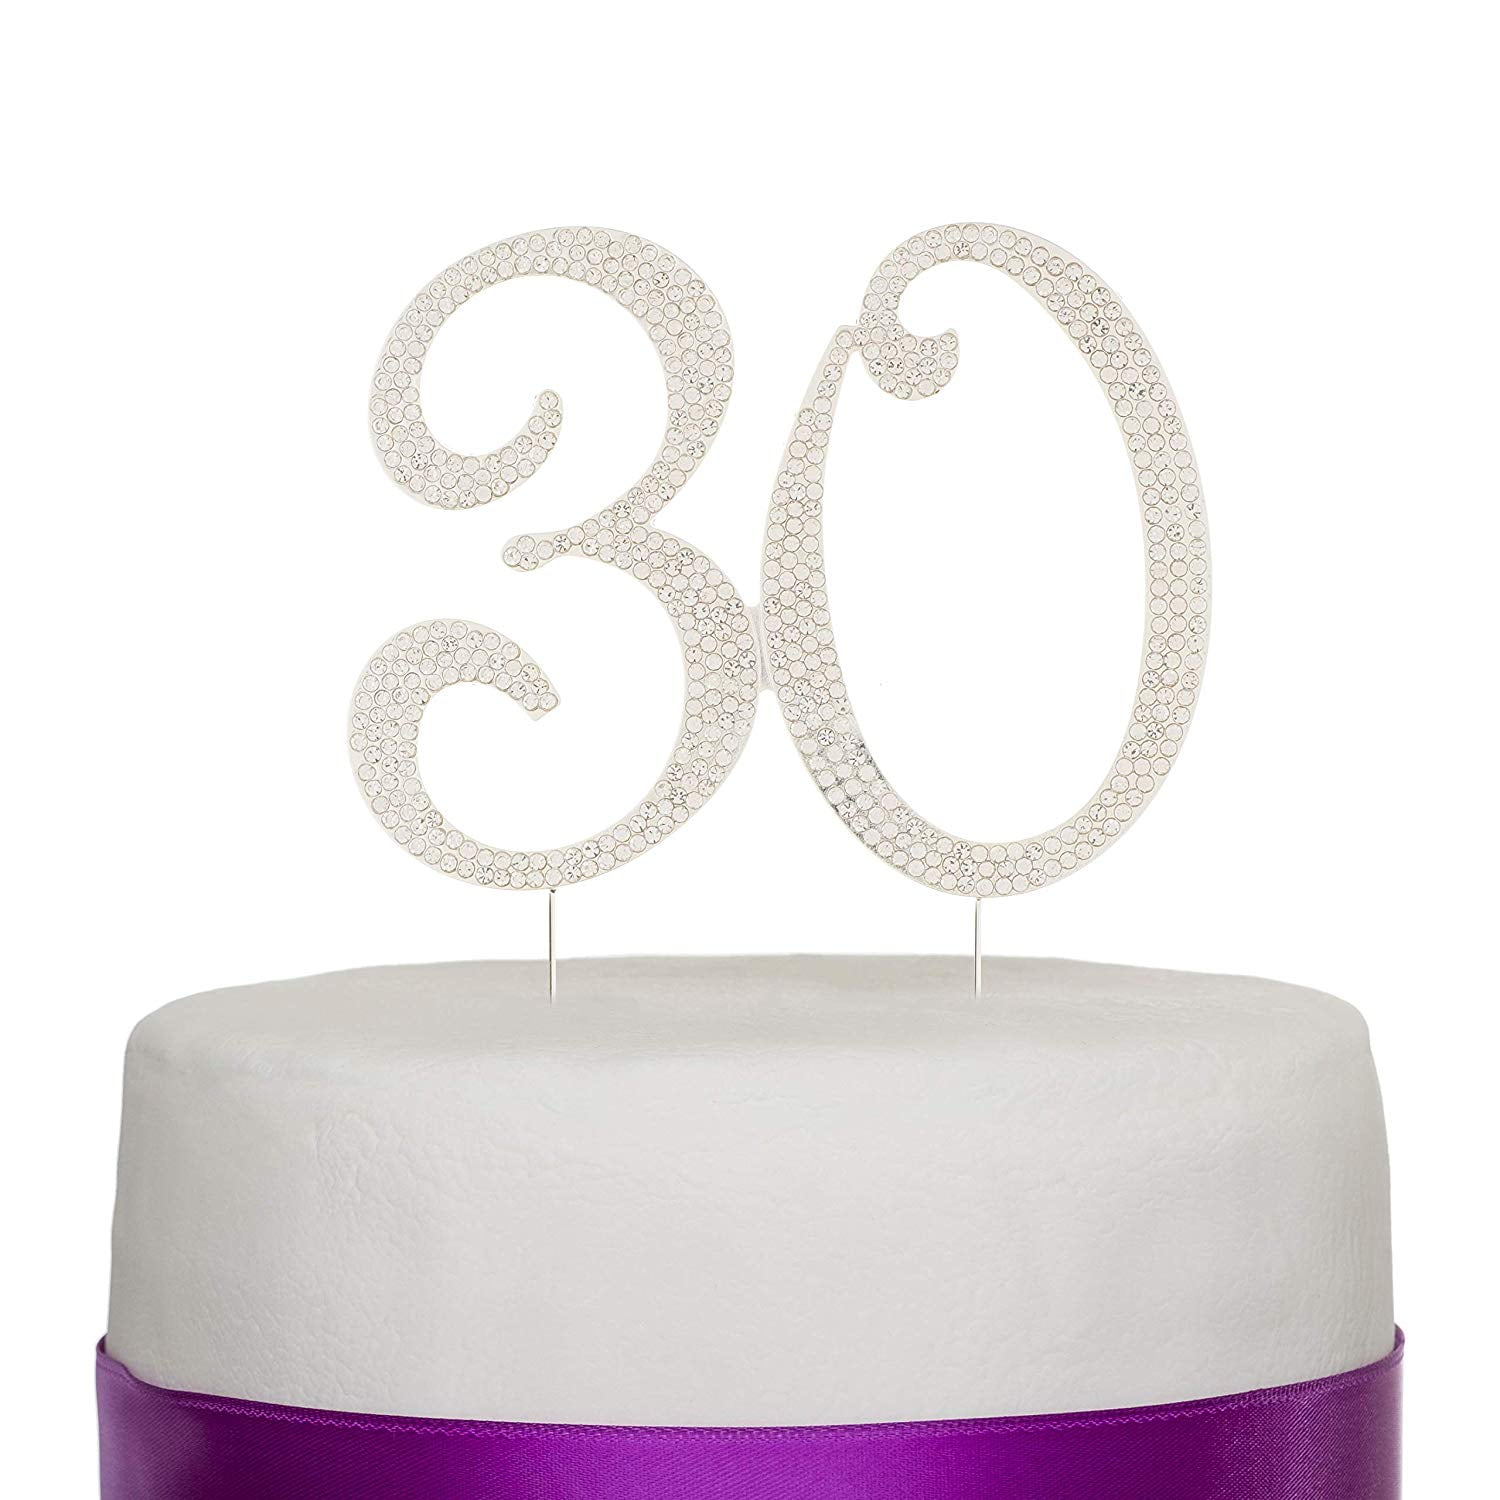 70 & Fabulous SILVER Cake Topper Birthday Party Decor Rhinestone Crystal 